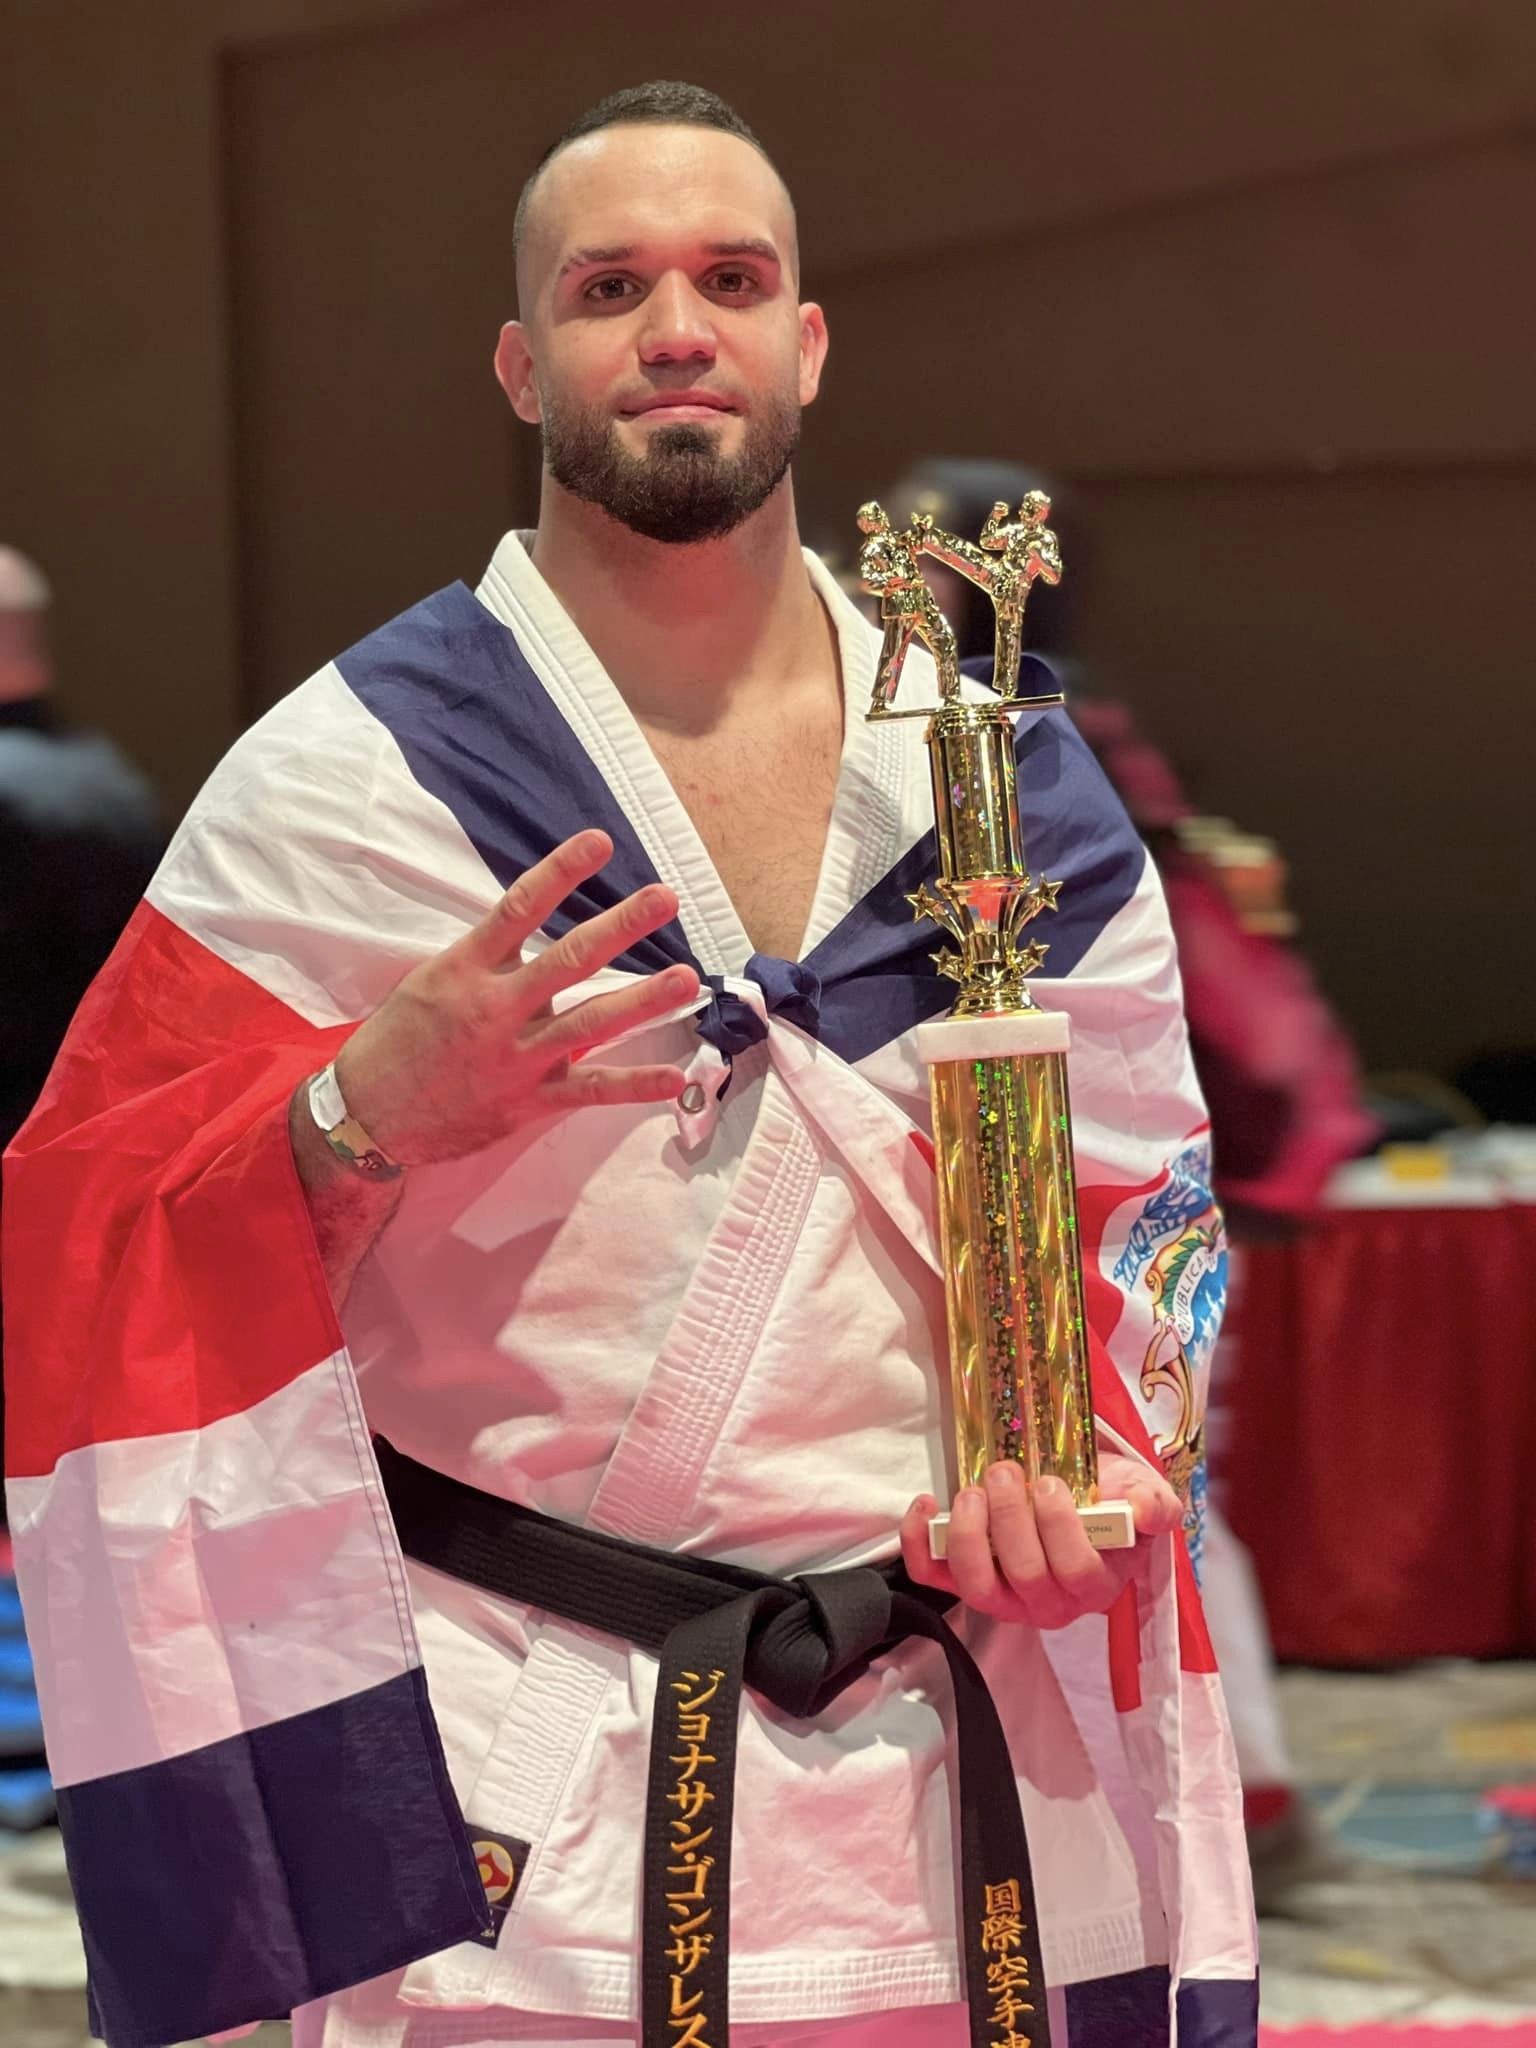 Jonathan González se coronó campeón por cuarta vez consecutiva del
Campeonato Internacional de Karate Kyokushin de los Estados Unidos. Cortesía